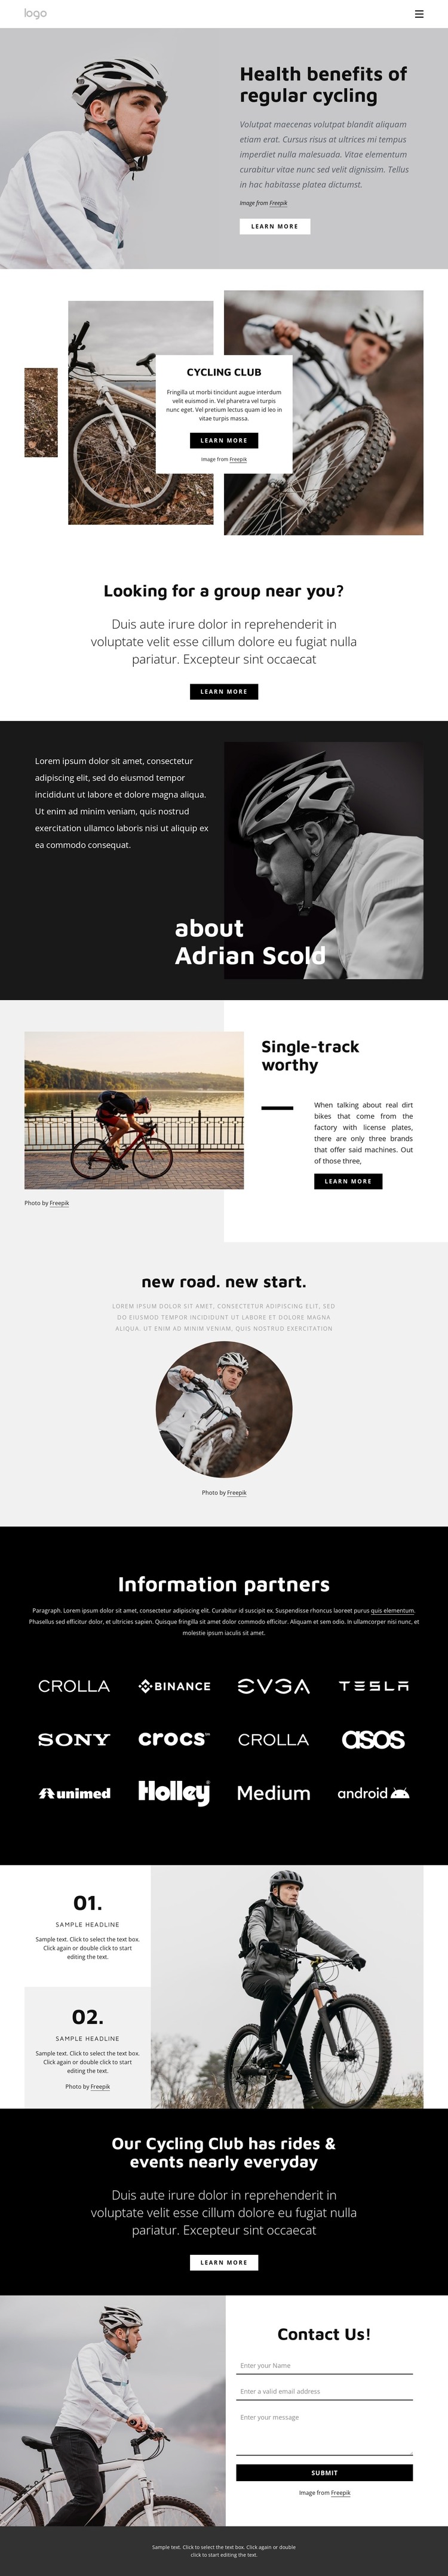 Benefits of regular cycling Web Design